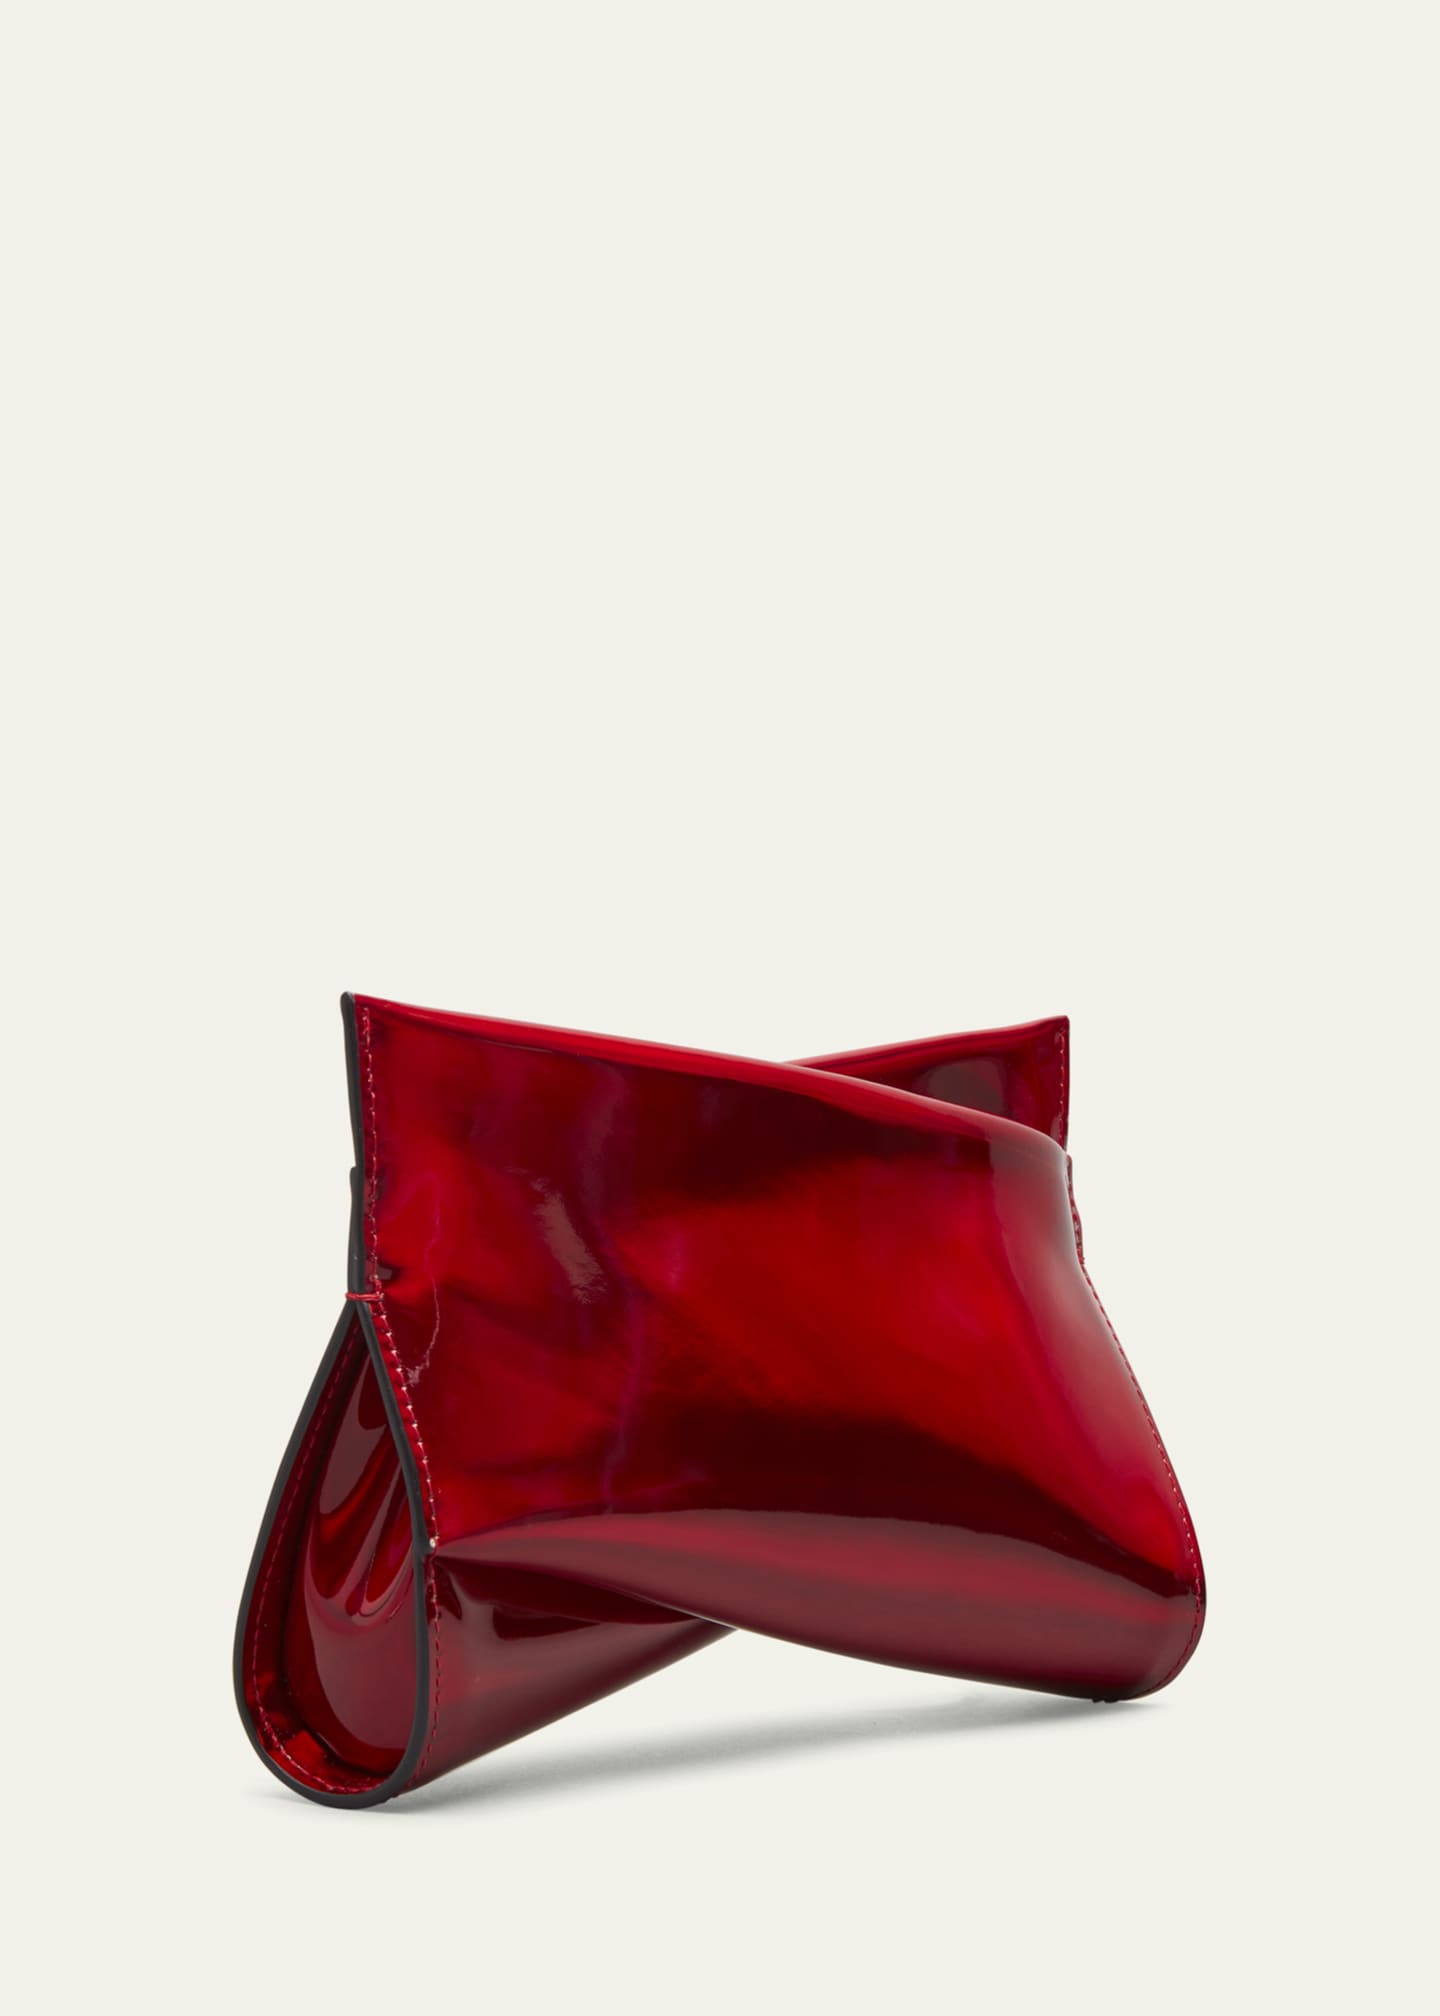 Christian Louboutin Loubitwist Small Psychic Patent Leather Clutch Bag -  Bergdorf Goodman